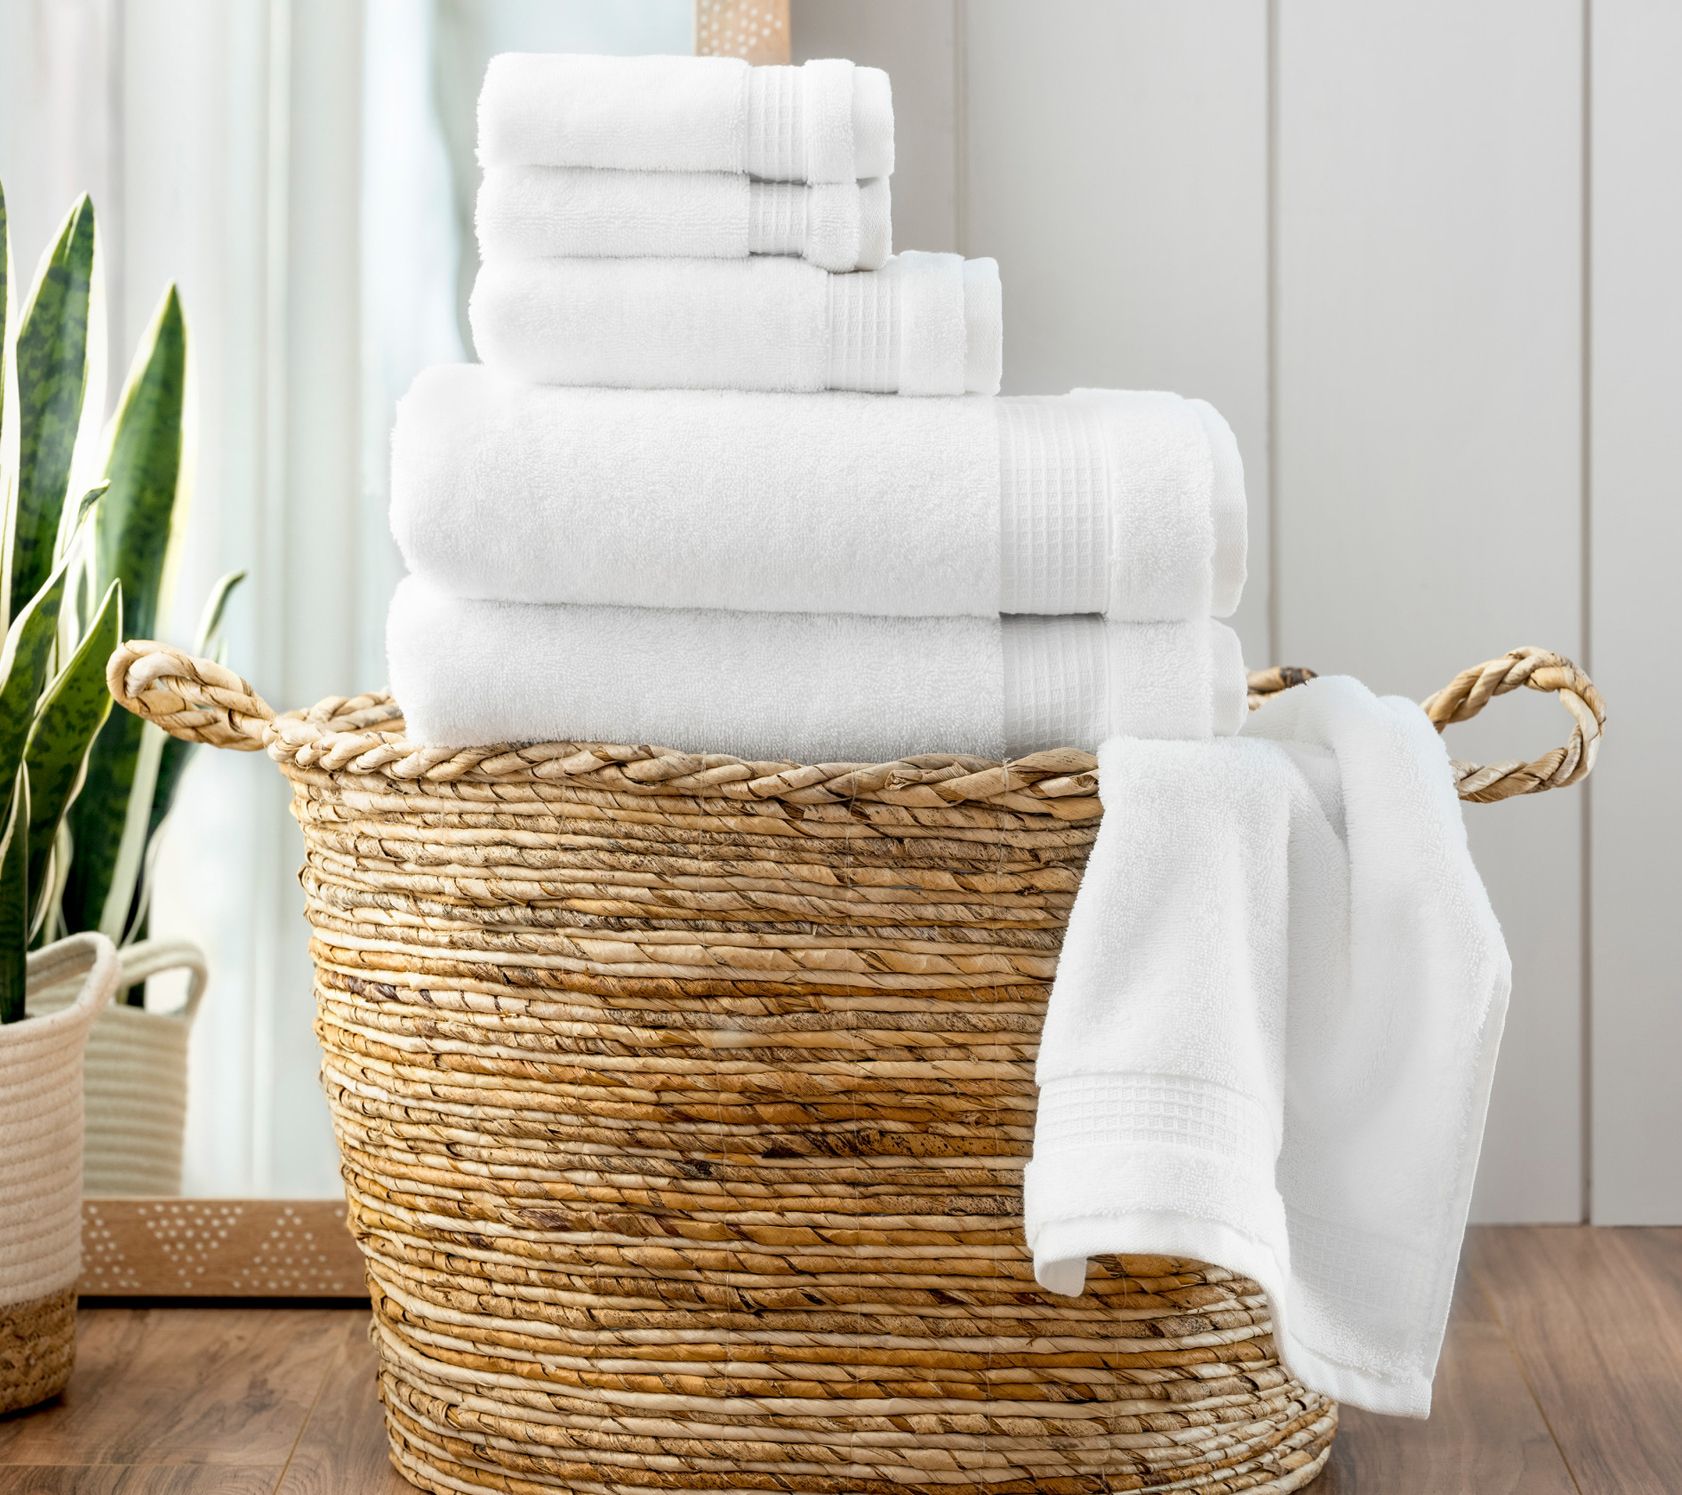  MARTHA STEWART 100% Cotton Bath Towels Set Of 6 Piece, 2 Bath  Towels, 2 Hand Towels, 2 Washcloths, Quick Dry Towels, Soft & Absorbent,  Bathroom Essentials, Blue : Home & Kitchen